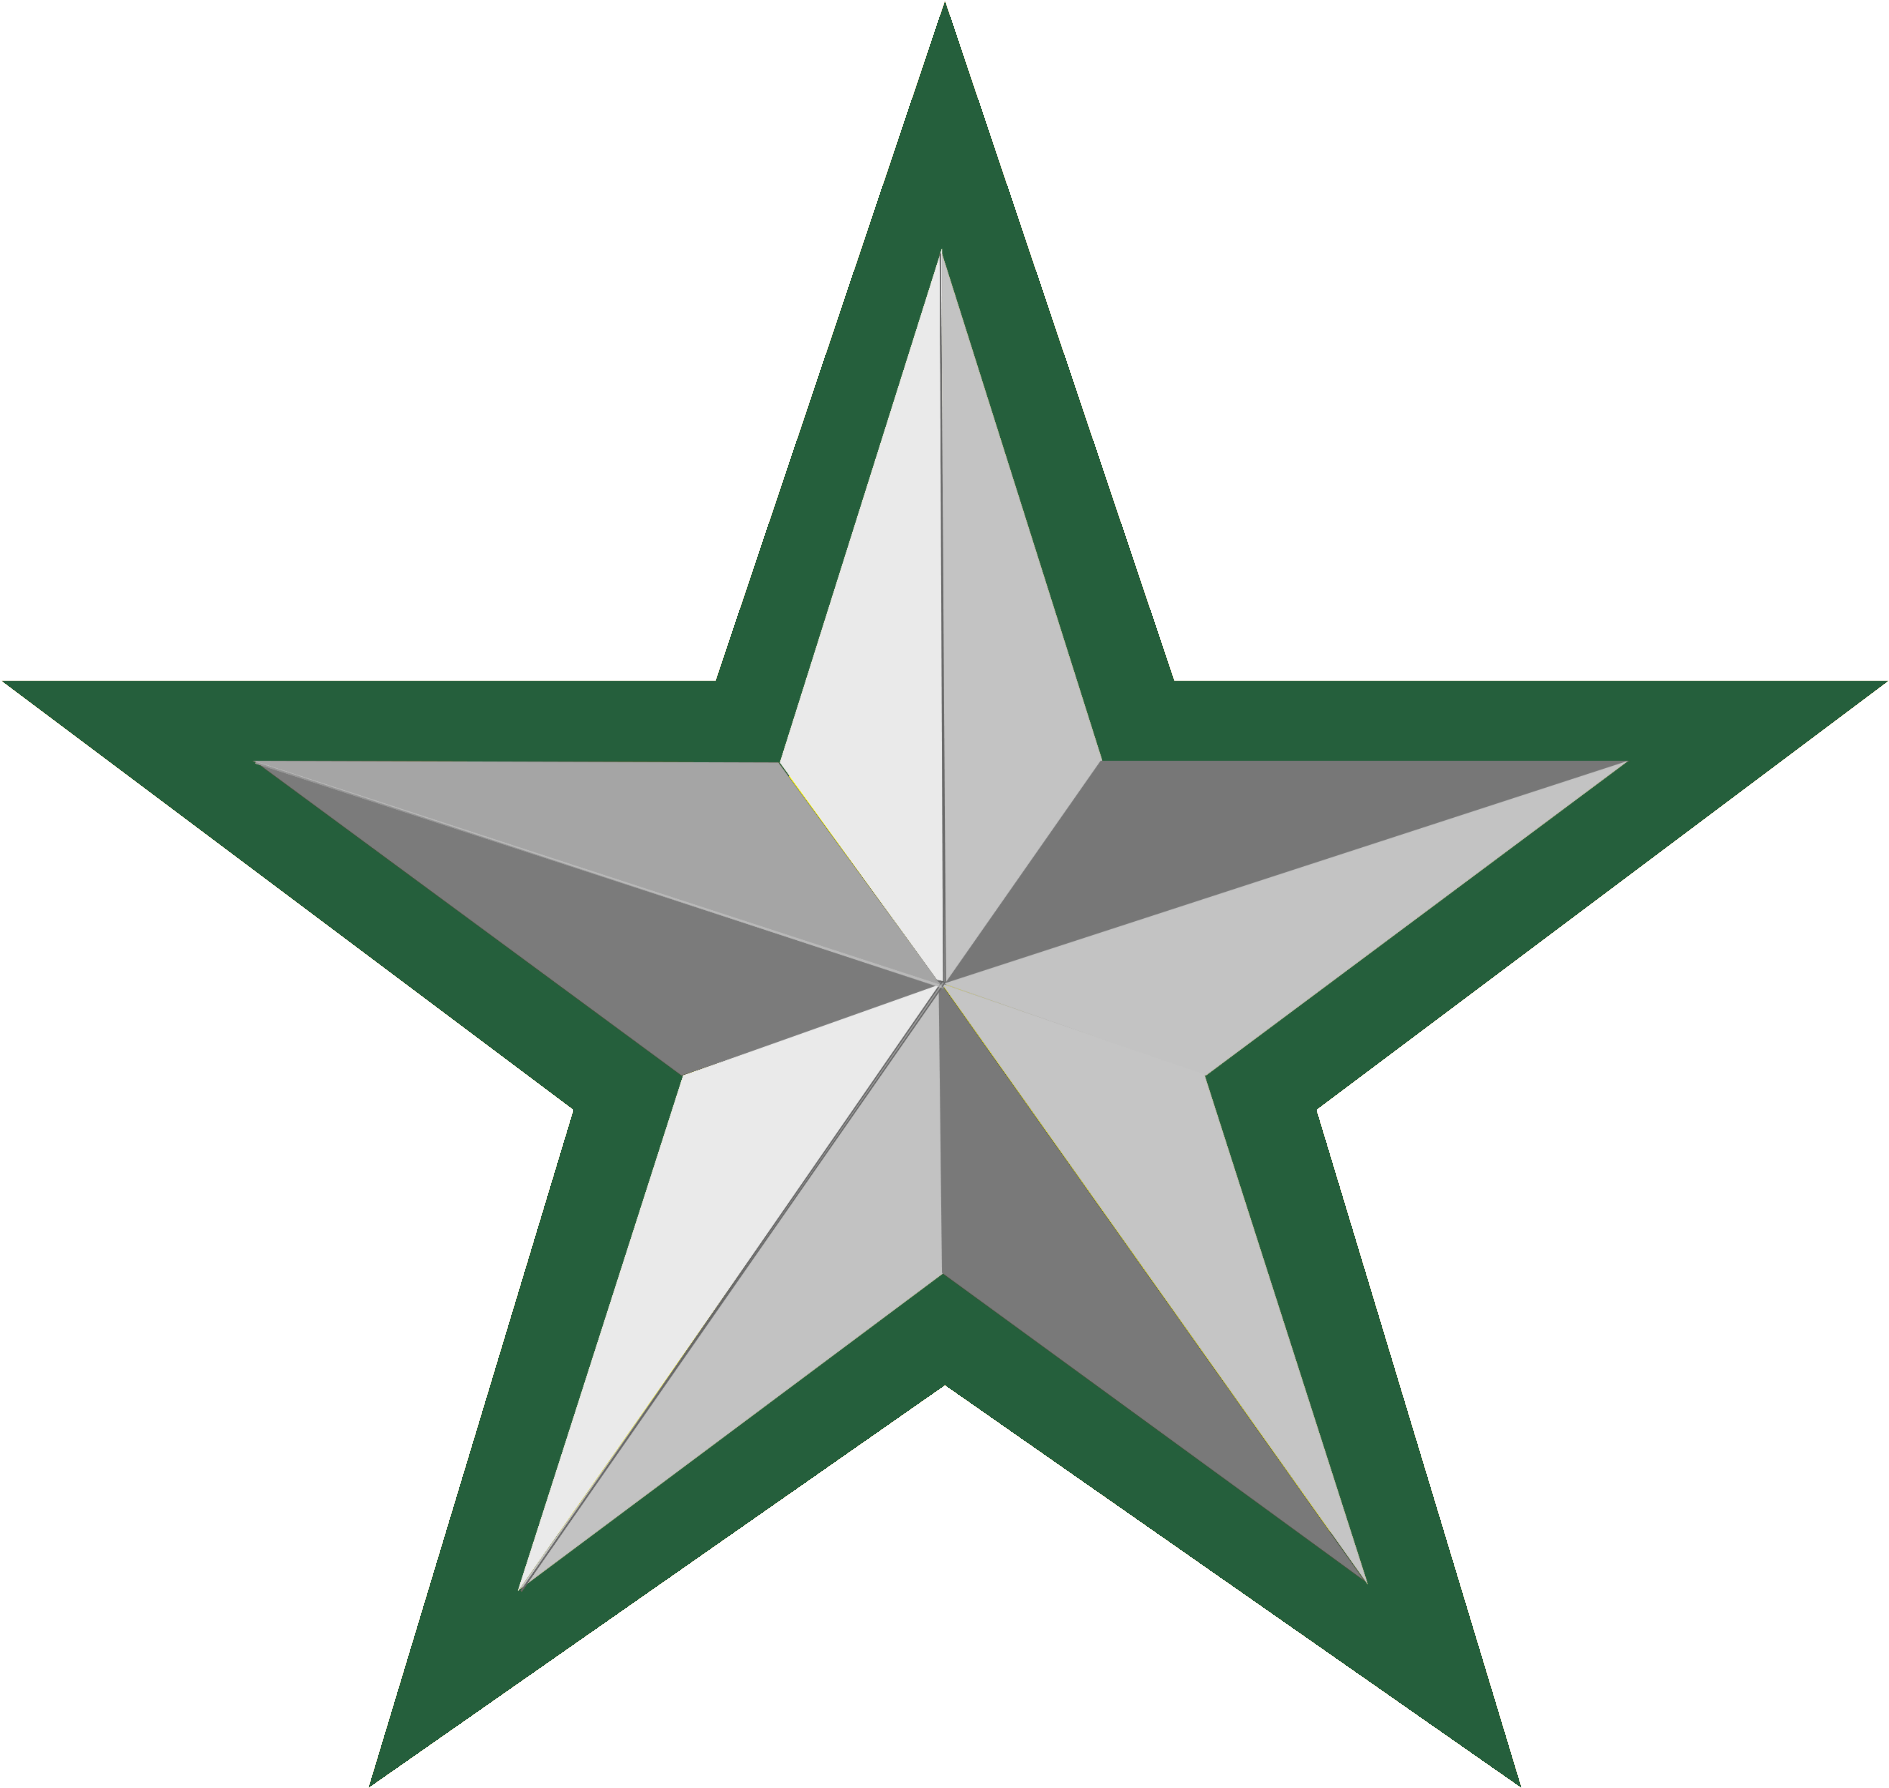 Green Star Images - School Program Invitation Sample (2000x1833)